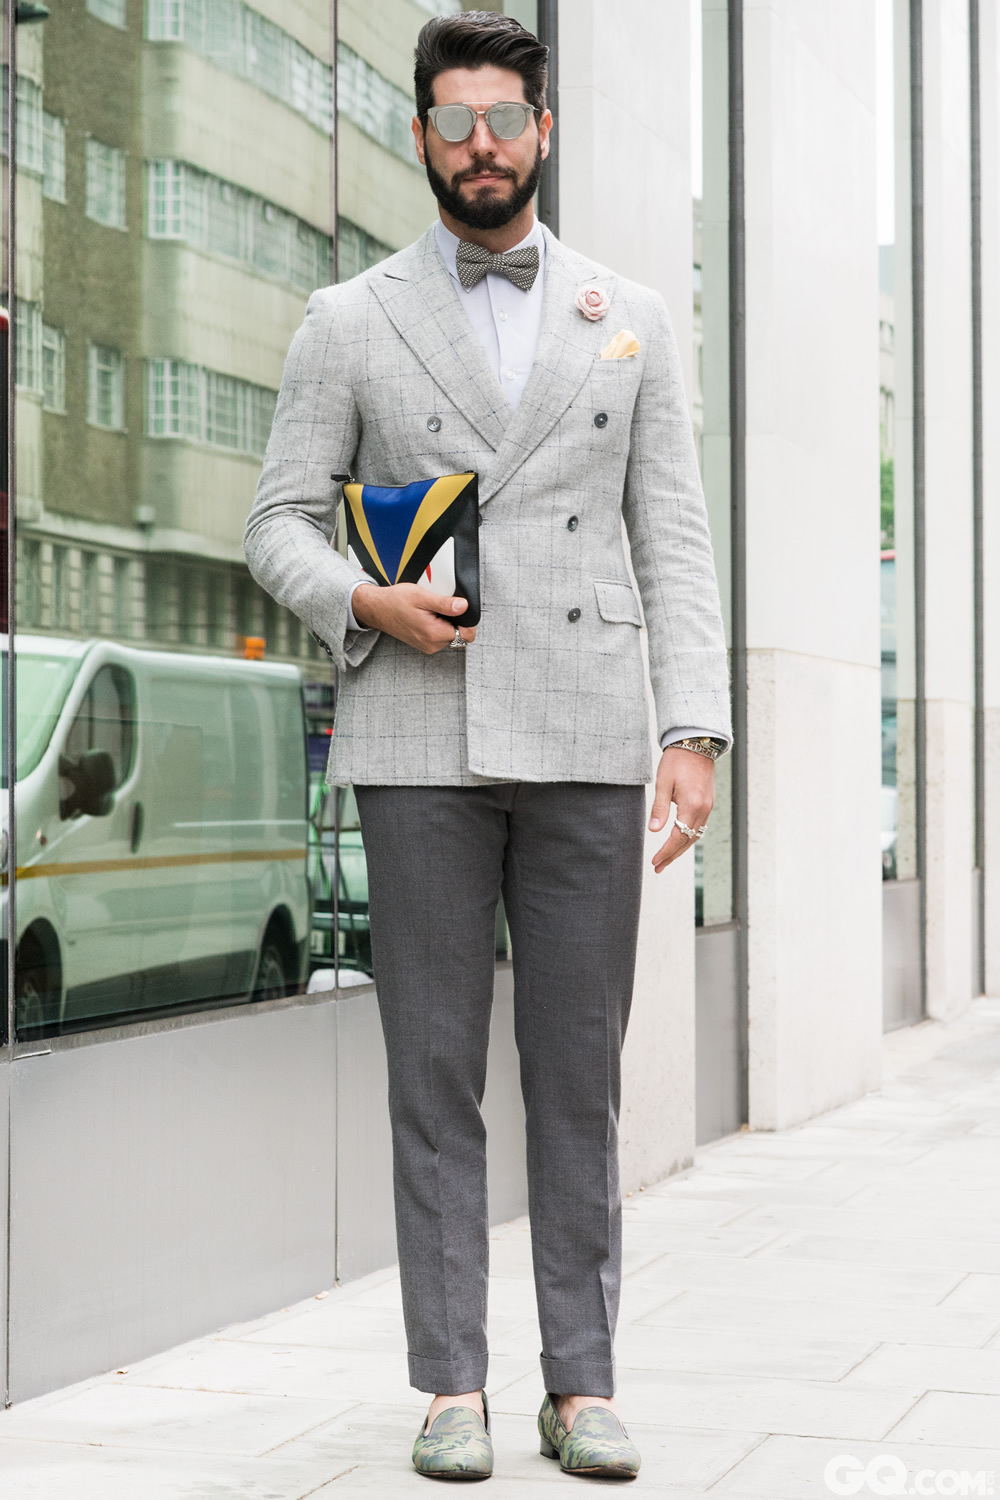 Kadu
Glasses: Dior Homme
Jacket: Tom Bellini
Shirt: VR
Bow tie: Zara
Trousers: Gant 
Shoes: Blue Bird
Bag: Fendi

Inspiration: 50 shades of grey
(50度灰)